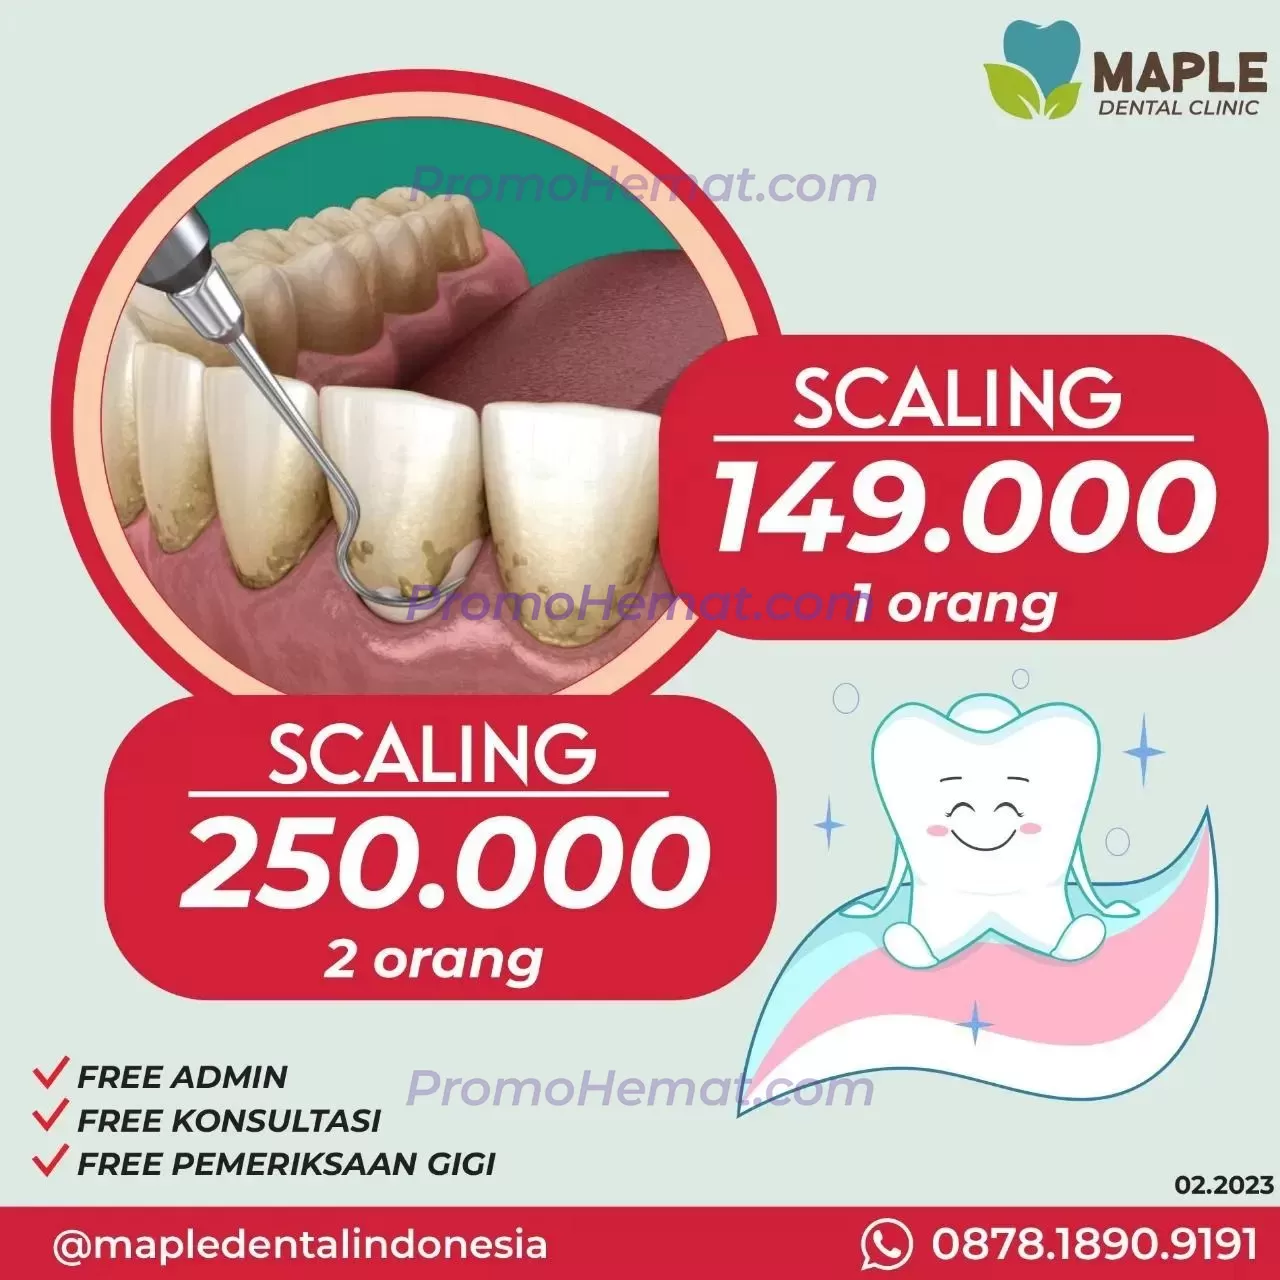 Promo Maple Dental Clinic February Deals image_1